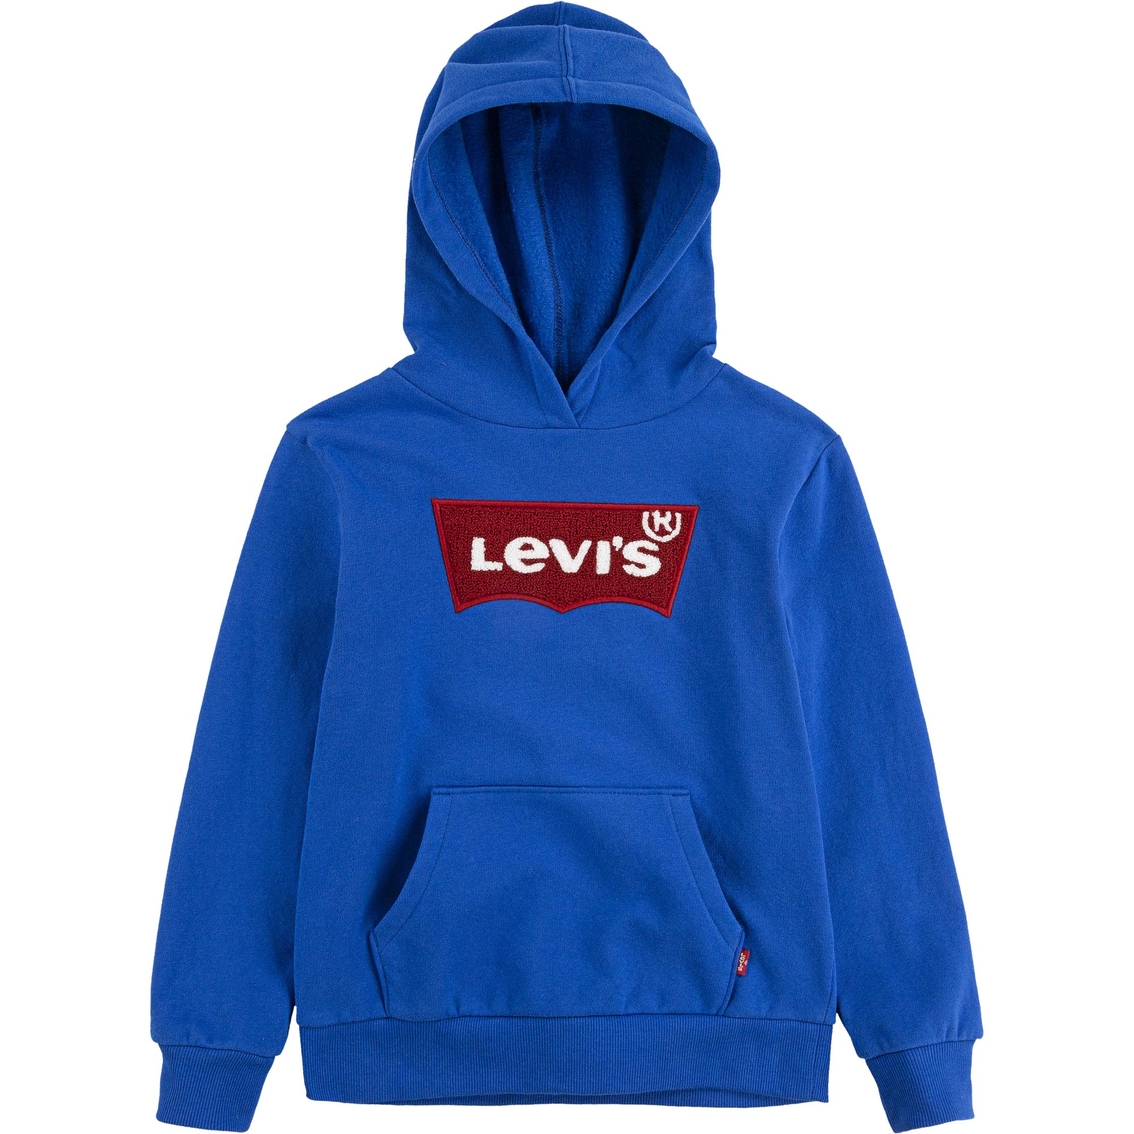 levis blue jumper